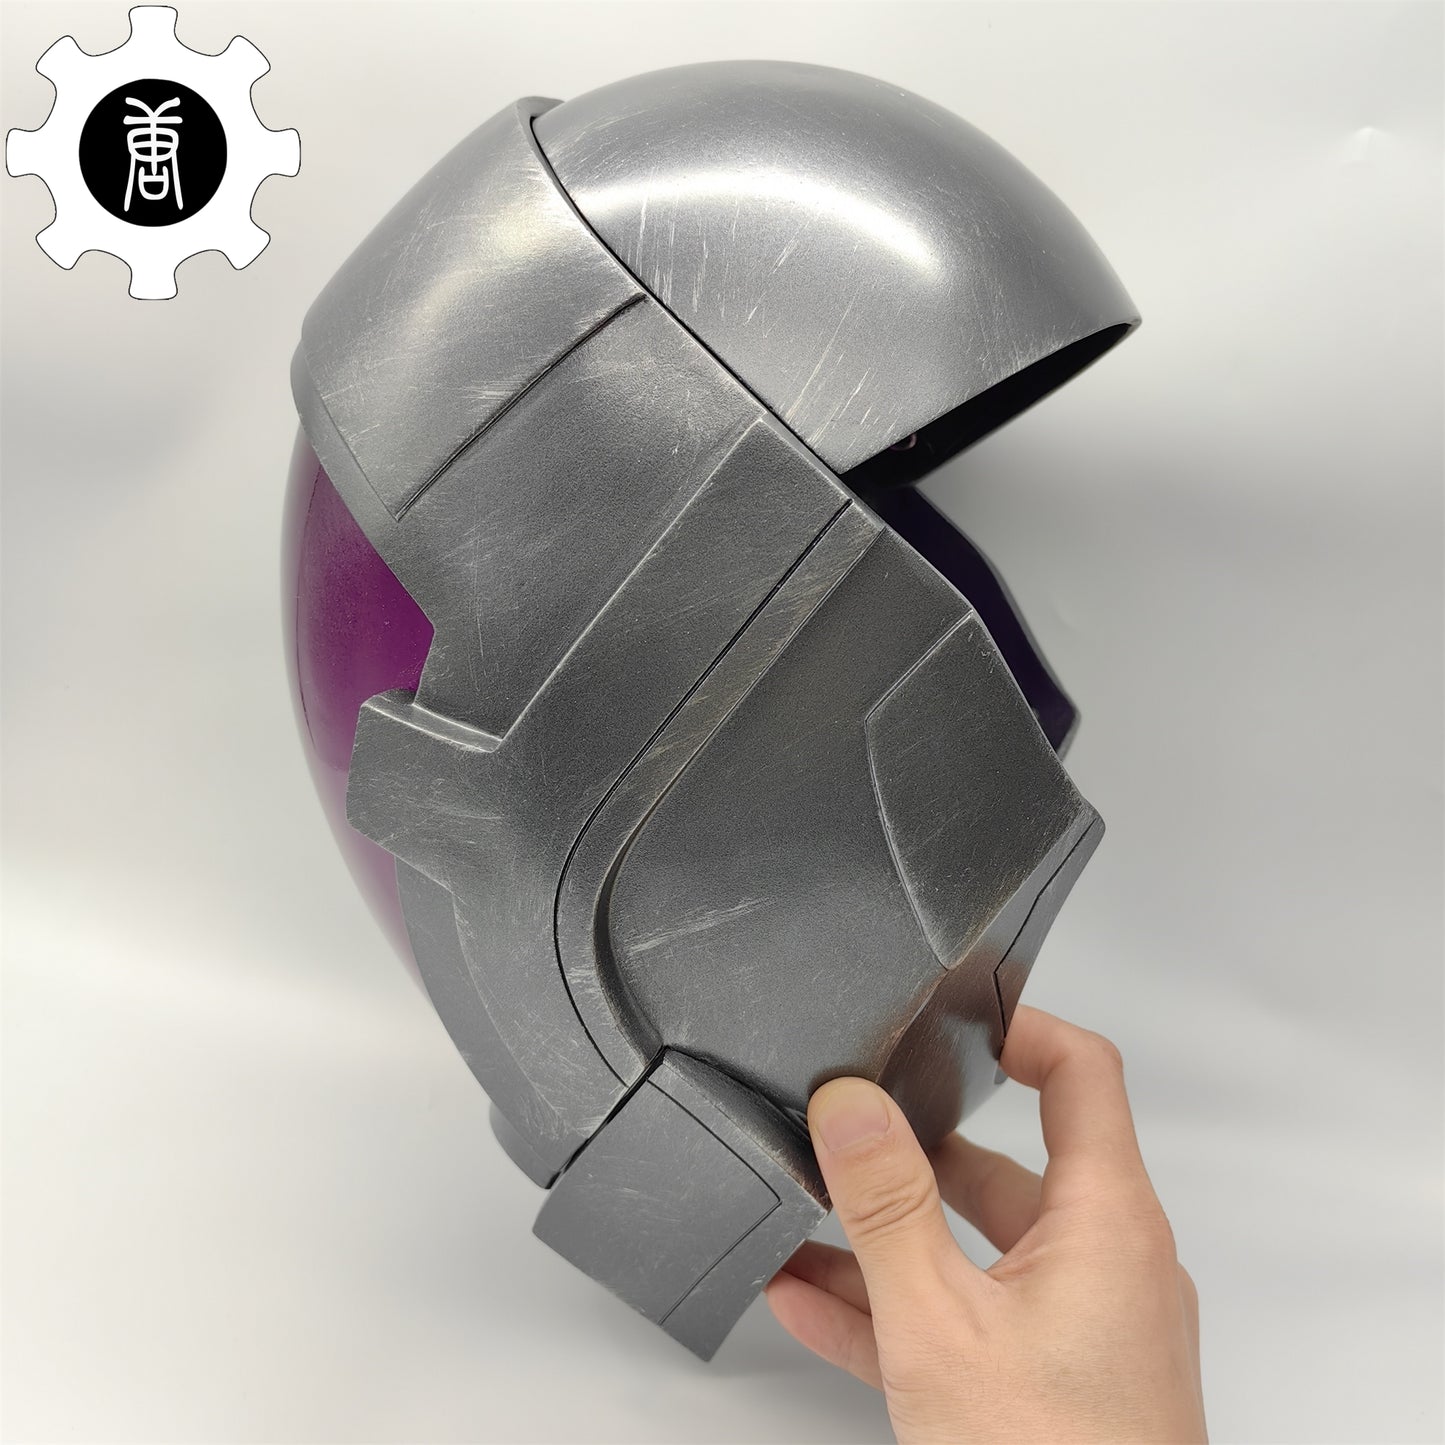 3D Printed Tali Zorah Helmet Mask Game Cosplay Prop